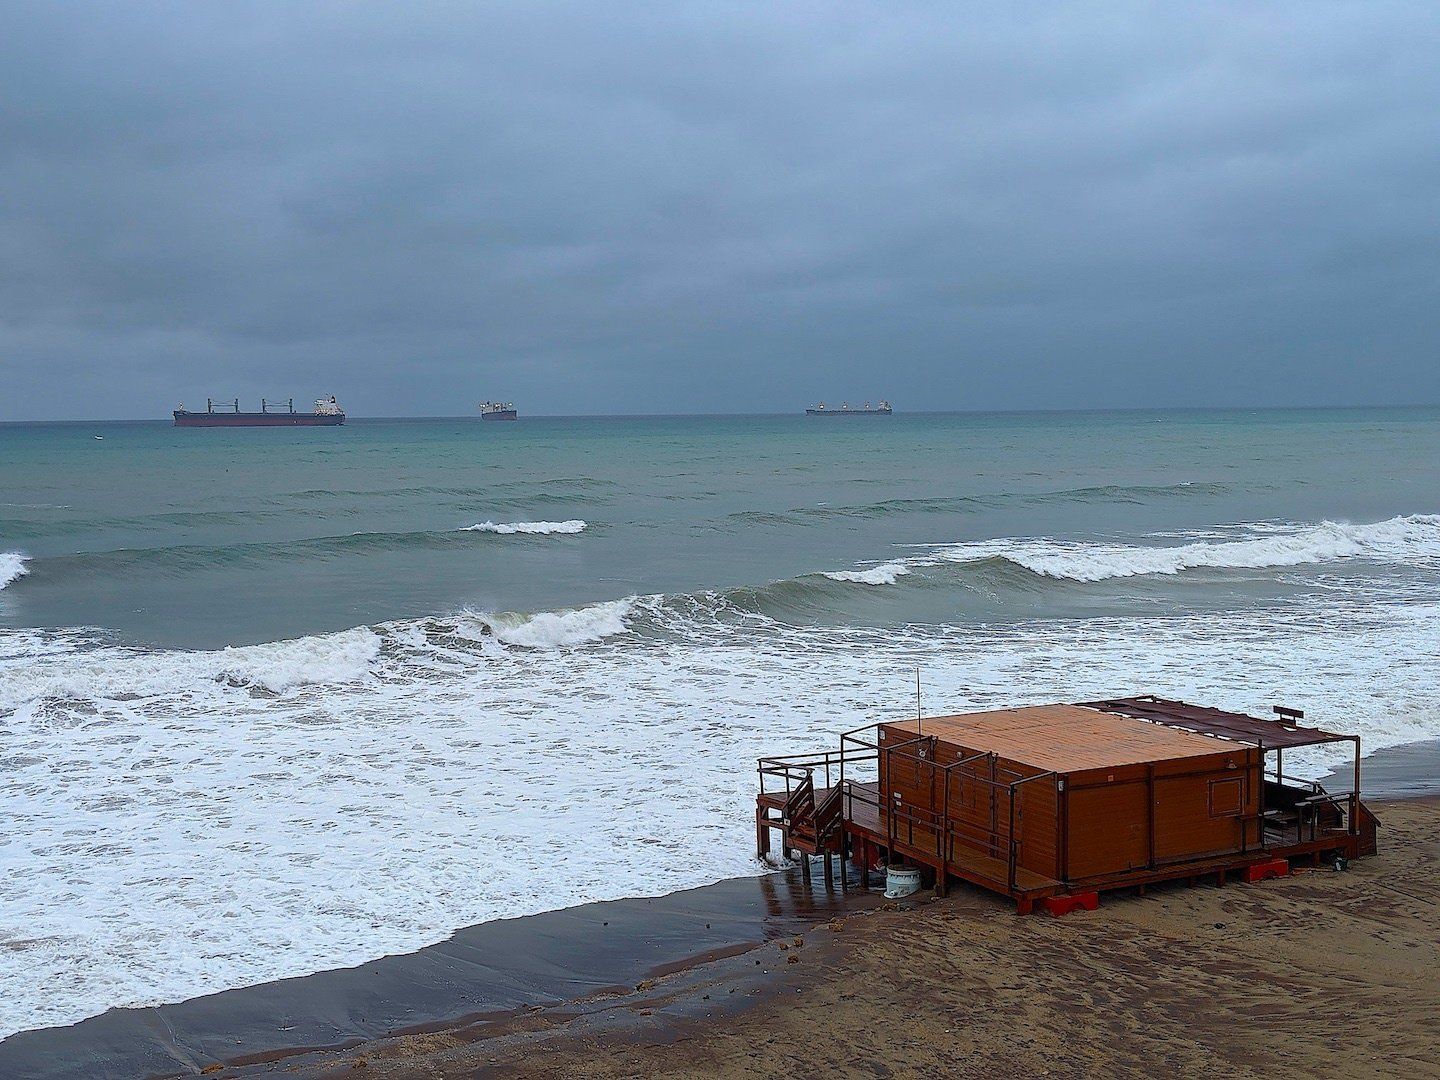 the sea envelops the beach bar during a storm